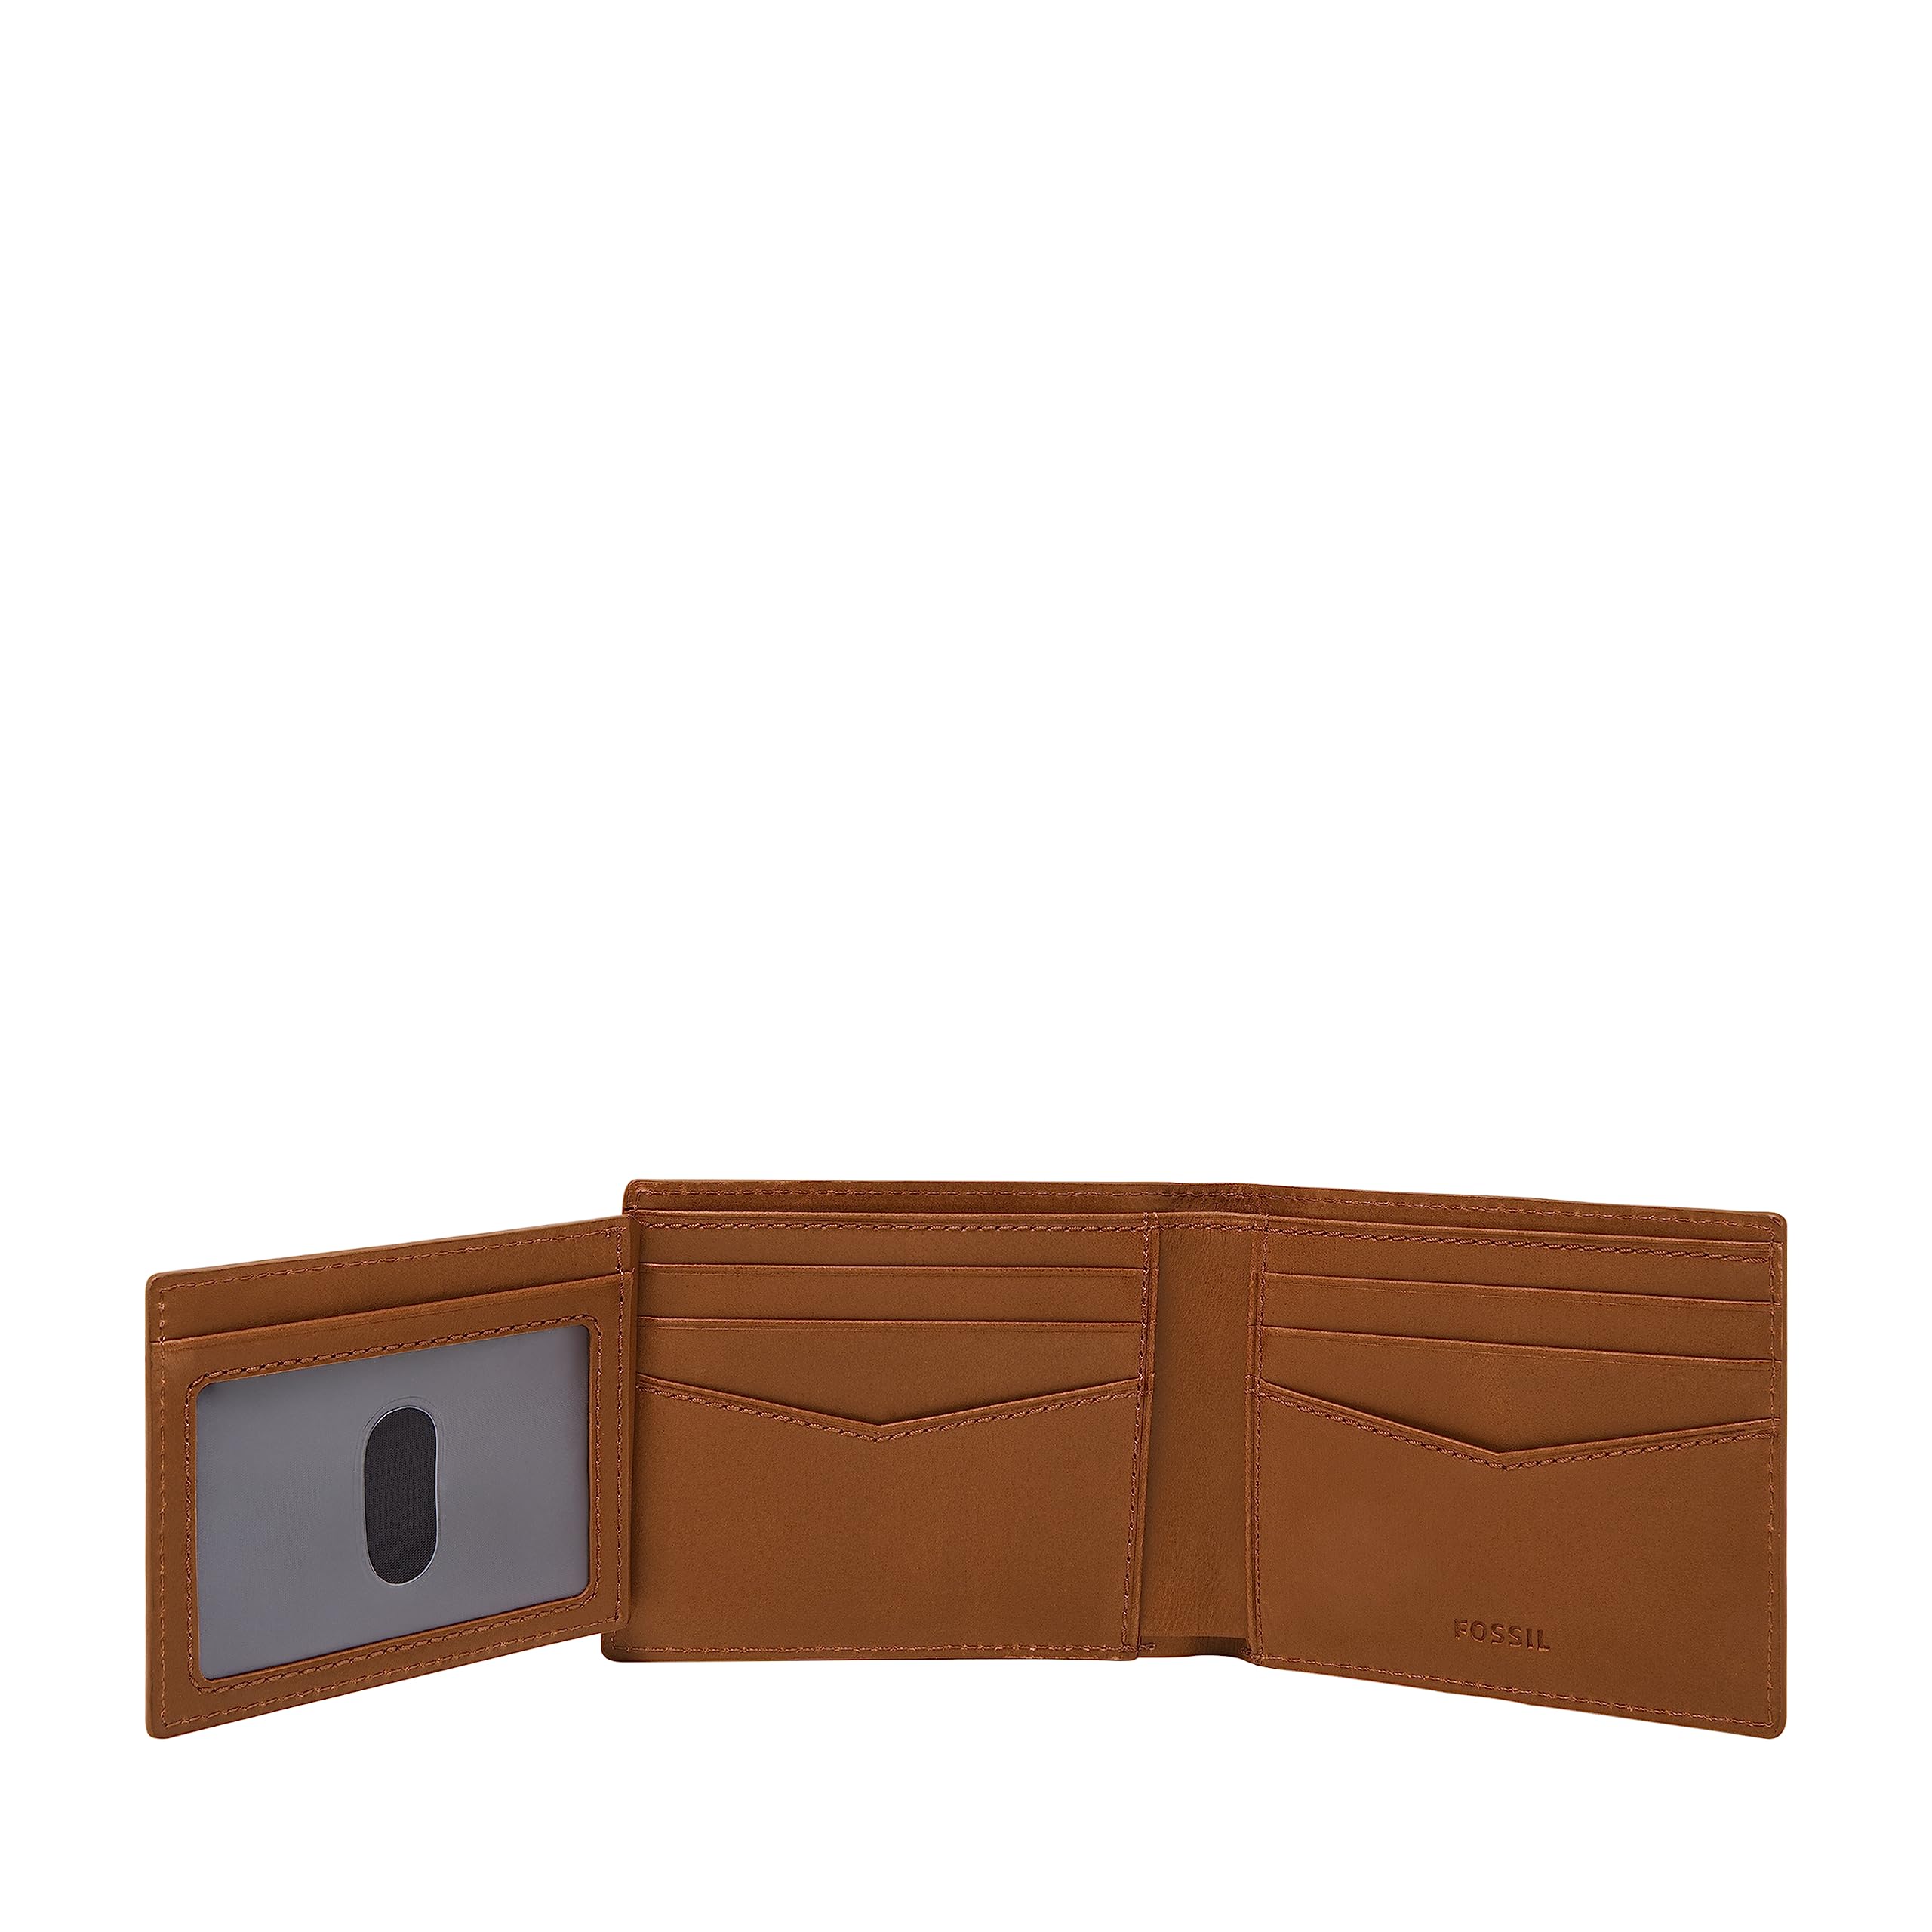 Fossil Men's Leather Bifold Wallet w/ Flip ID Window $19 + Free Shipping w/ Prime or on $35+